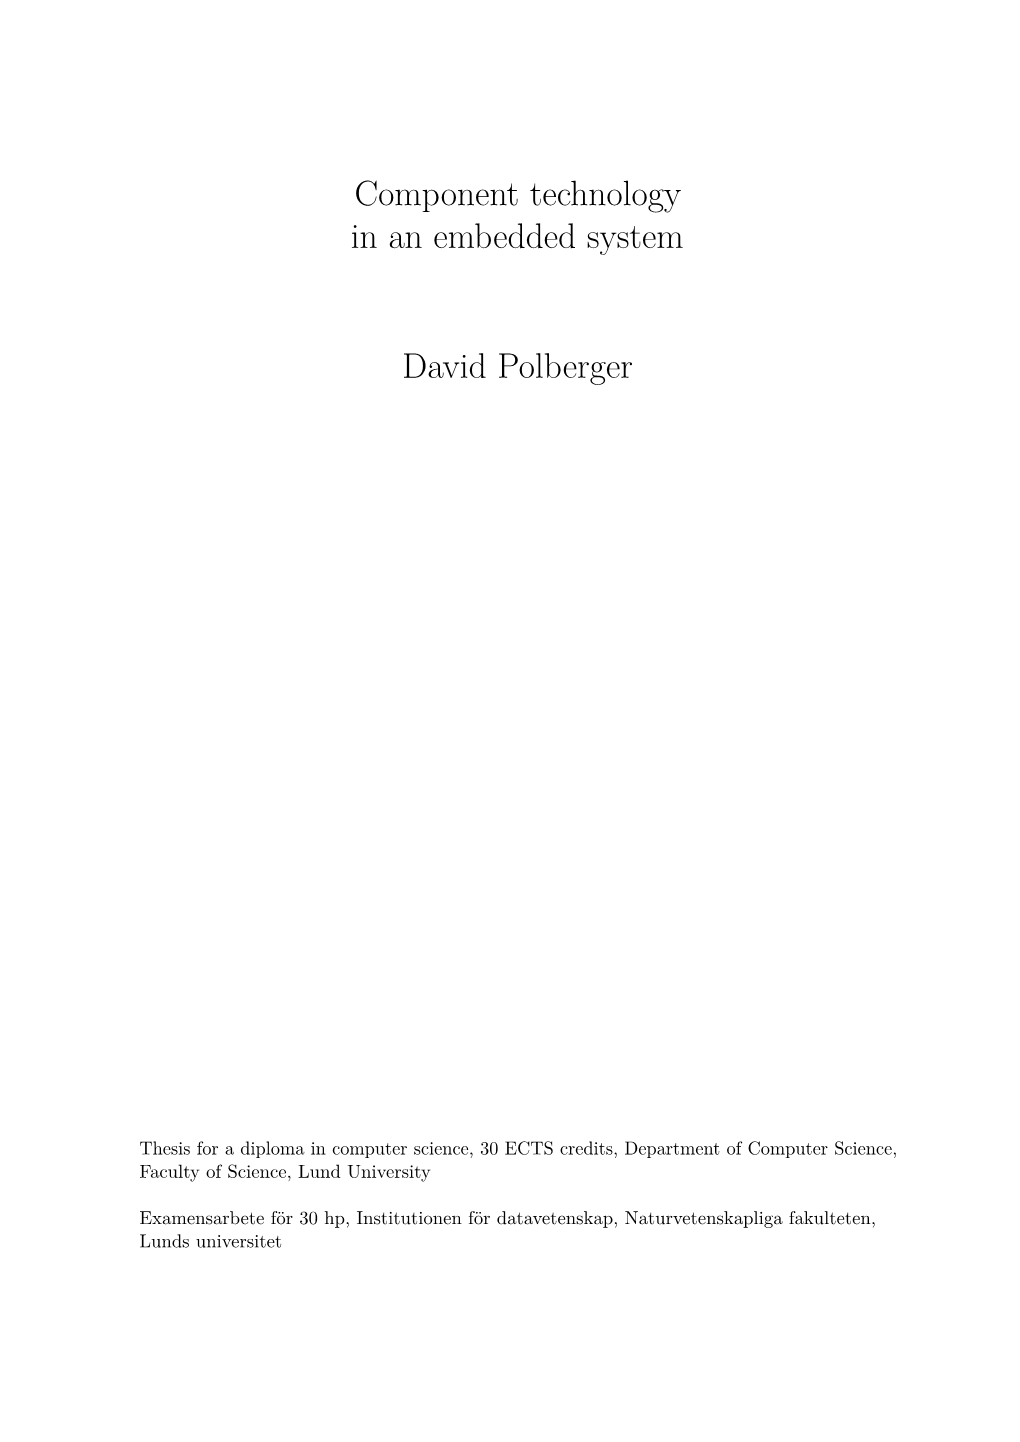 PDF Version of Thesis